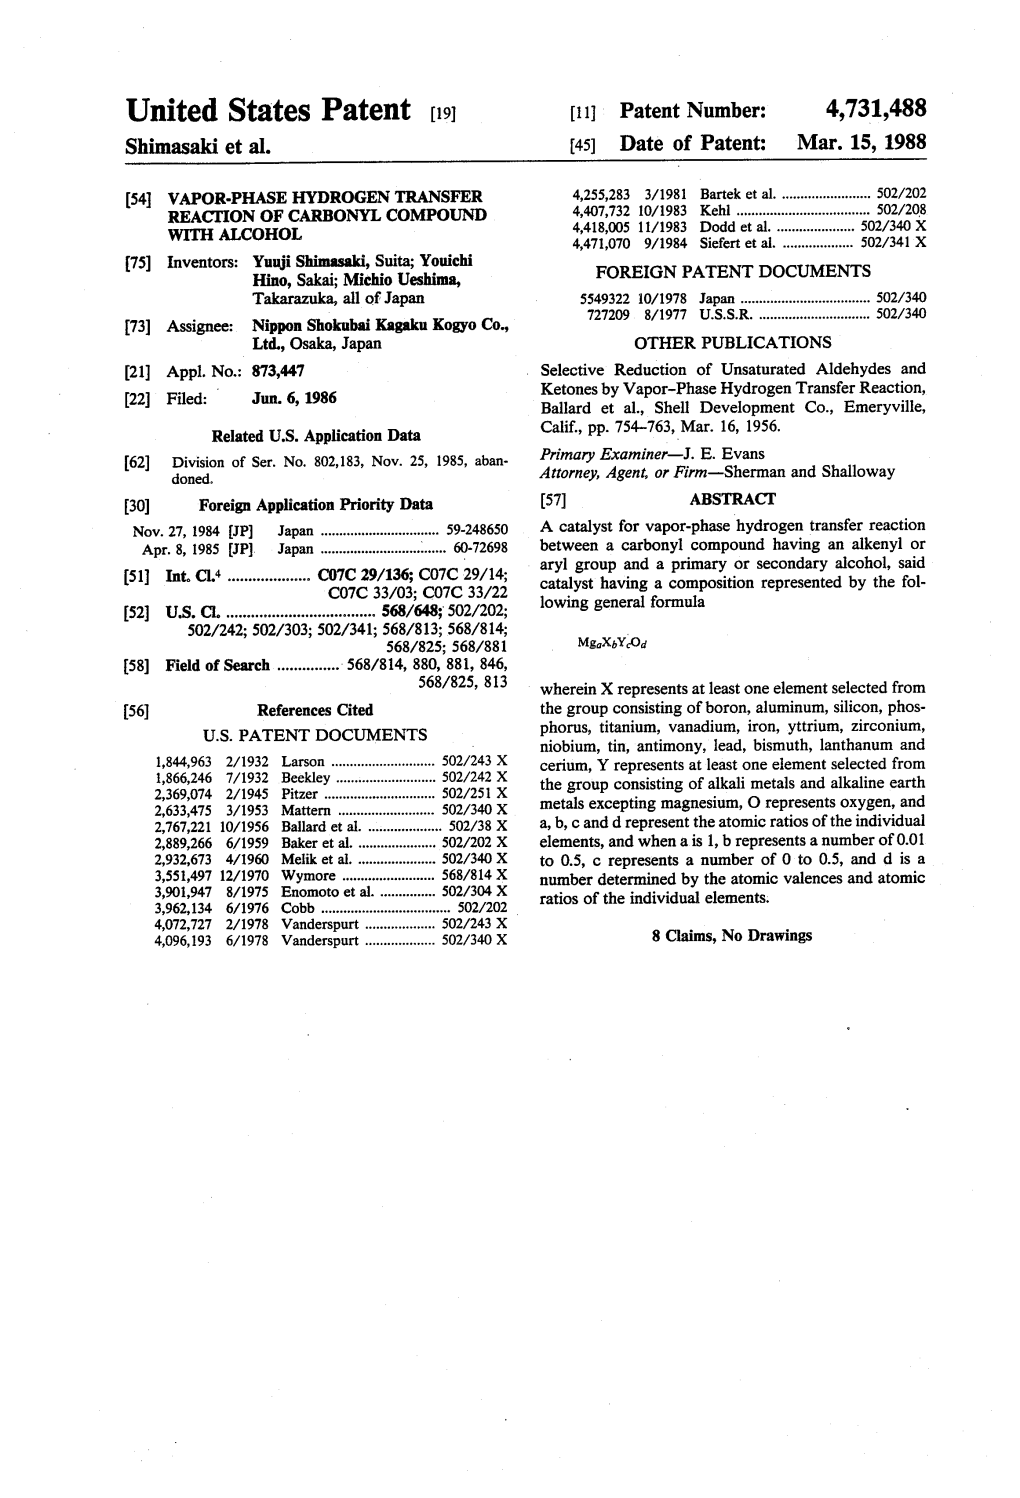 United States Patent (19) 4,731,488